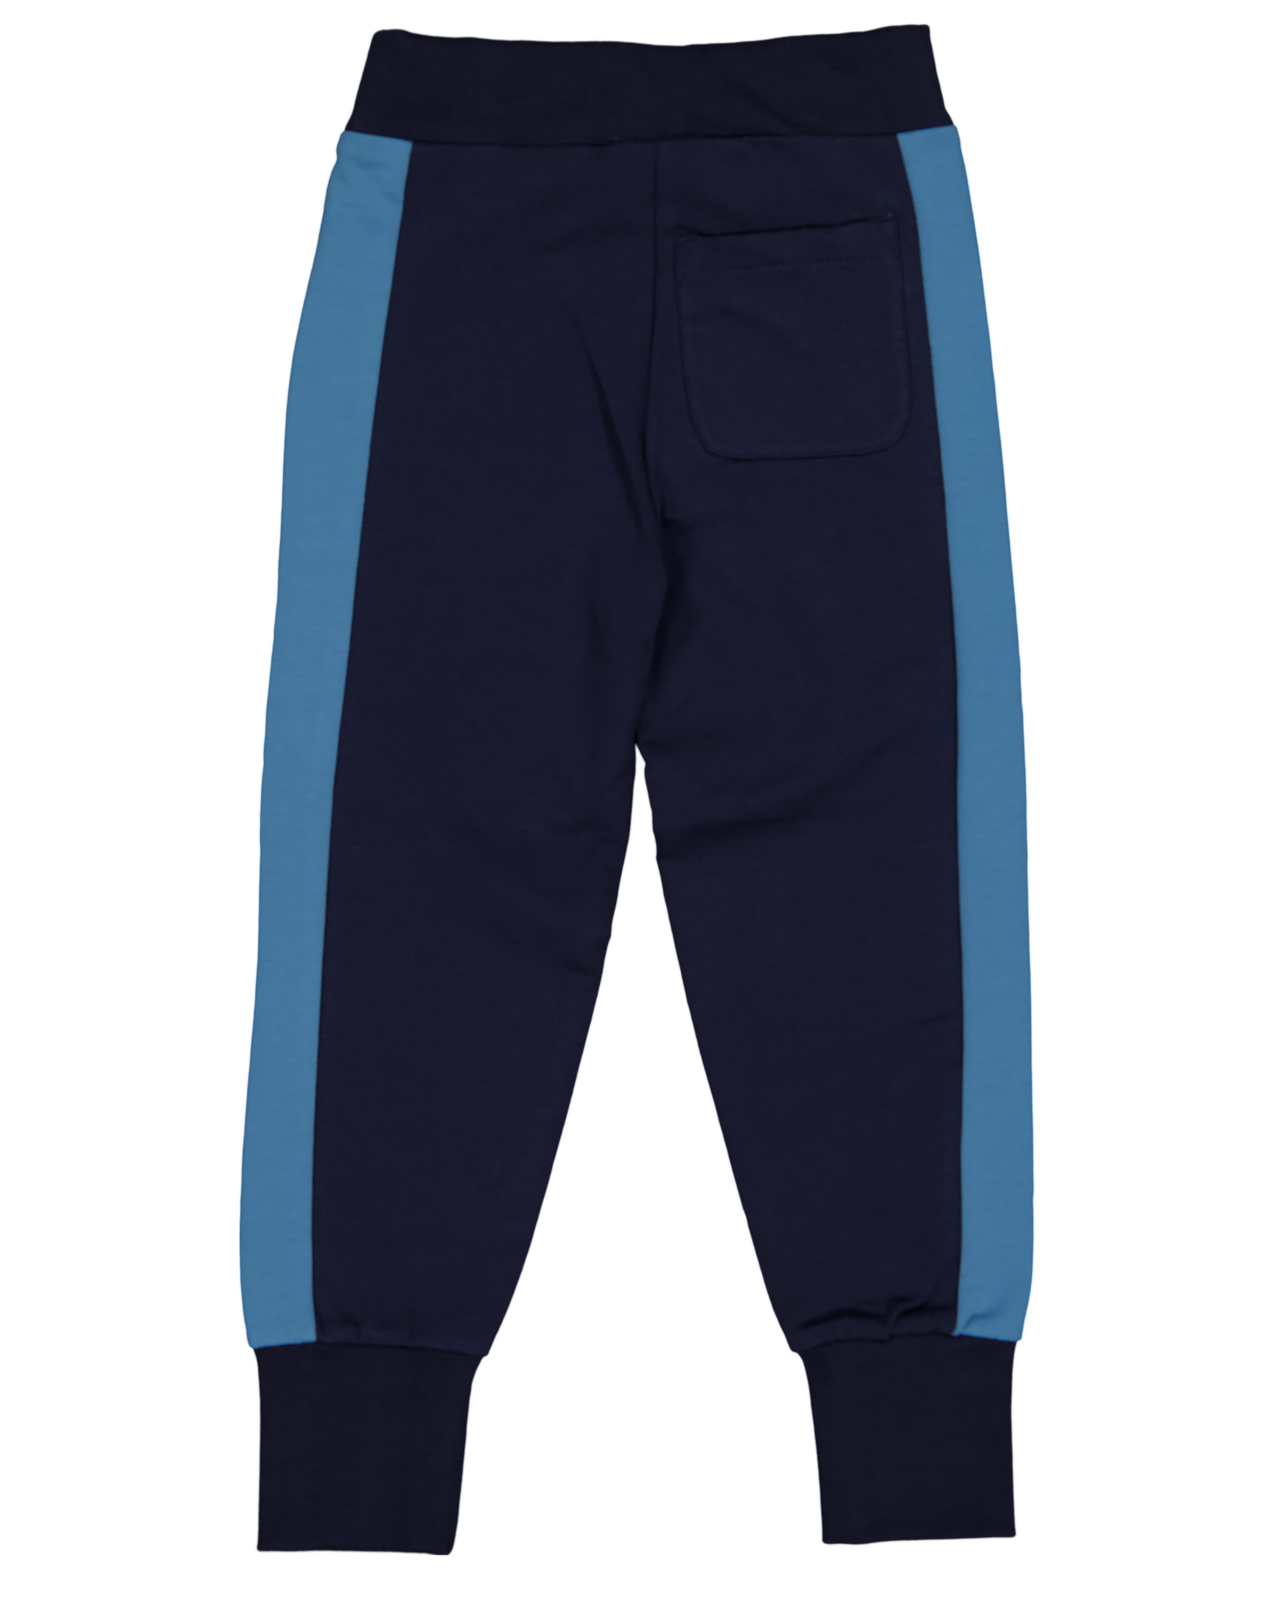 College pants Navy